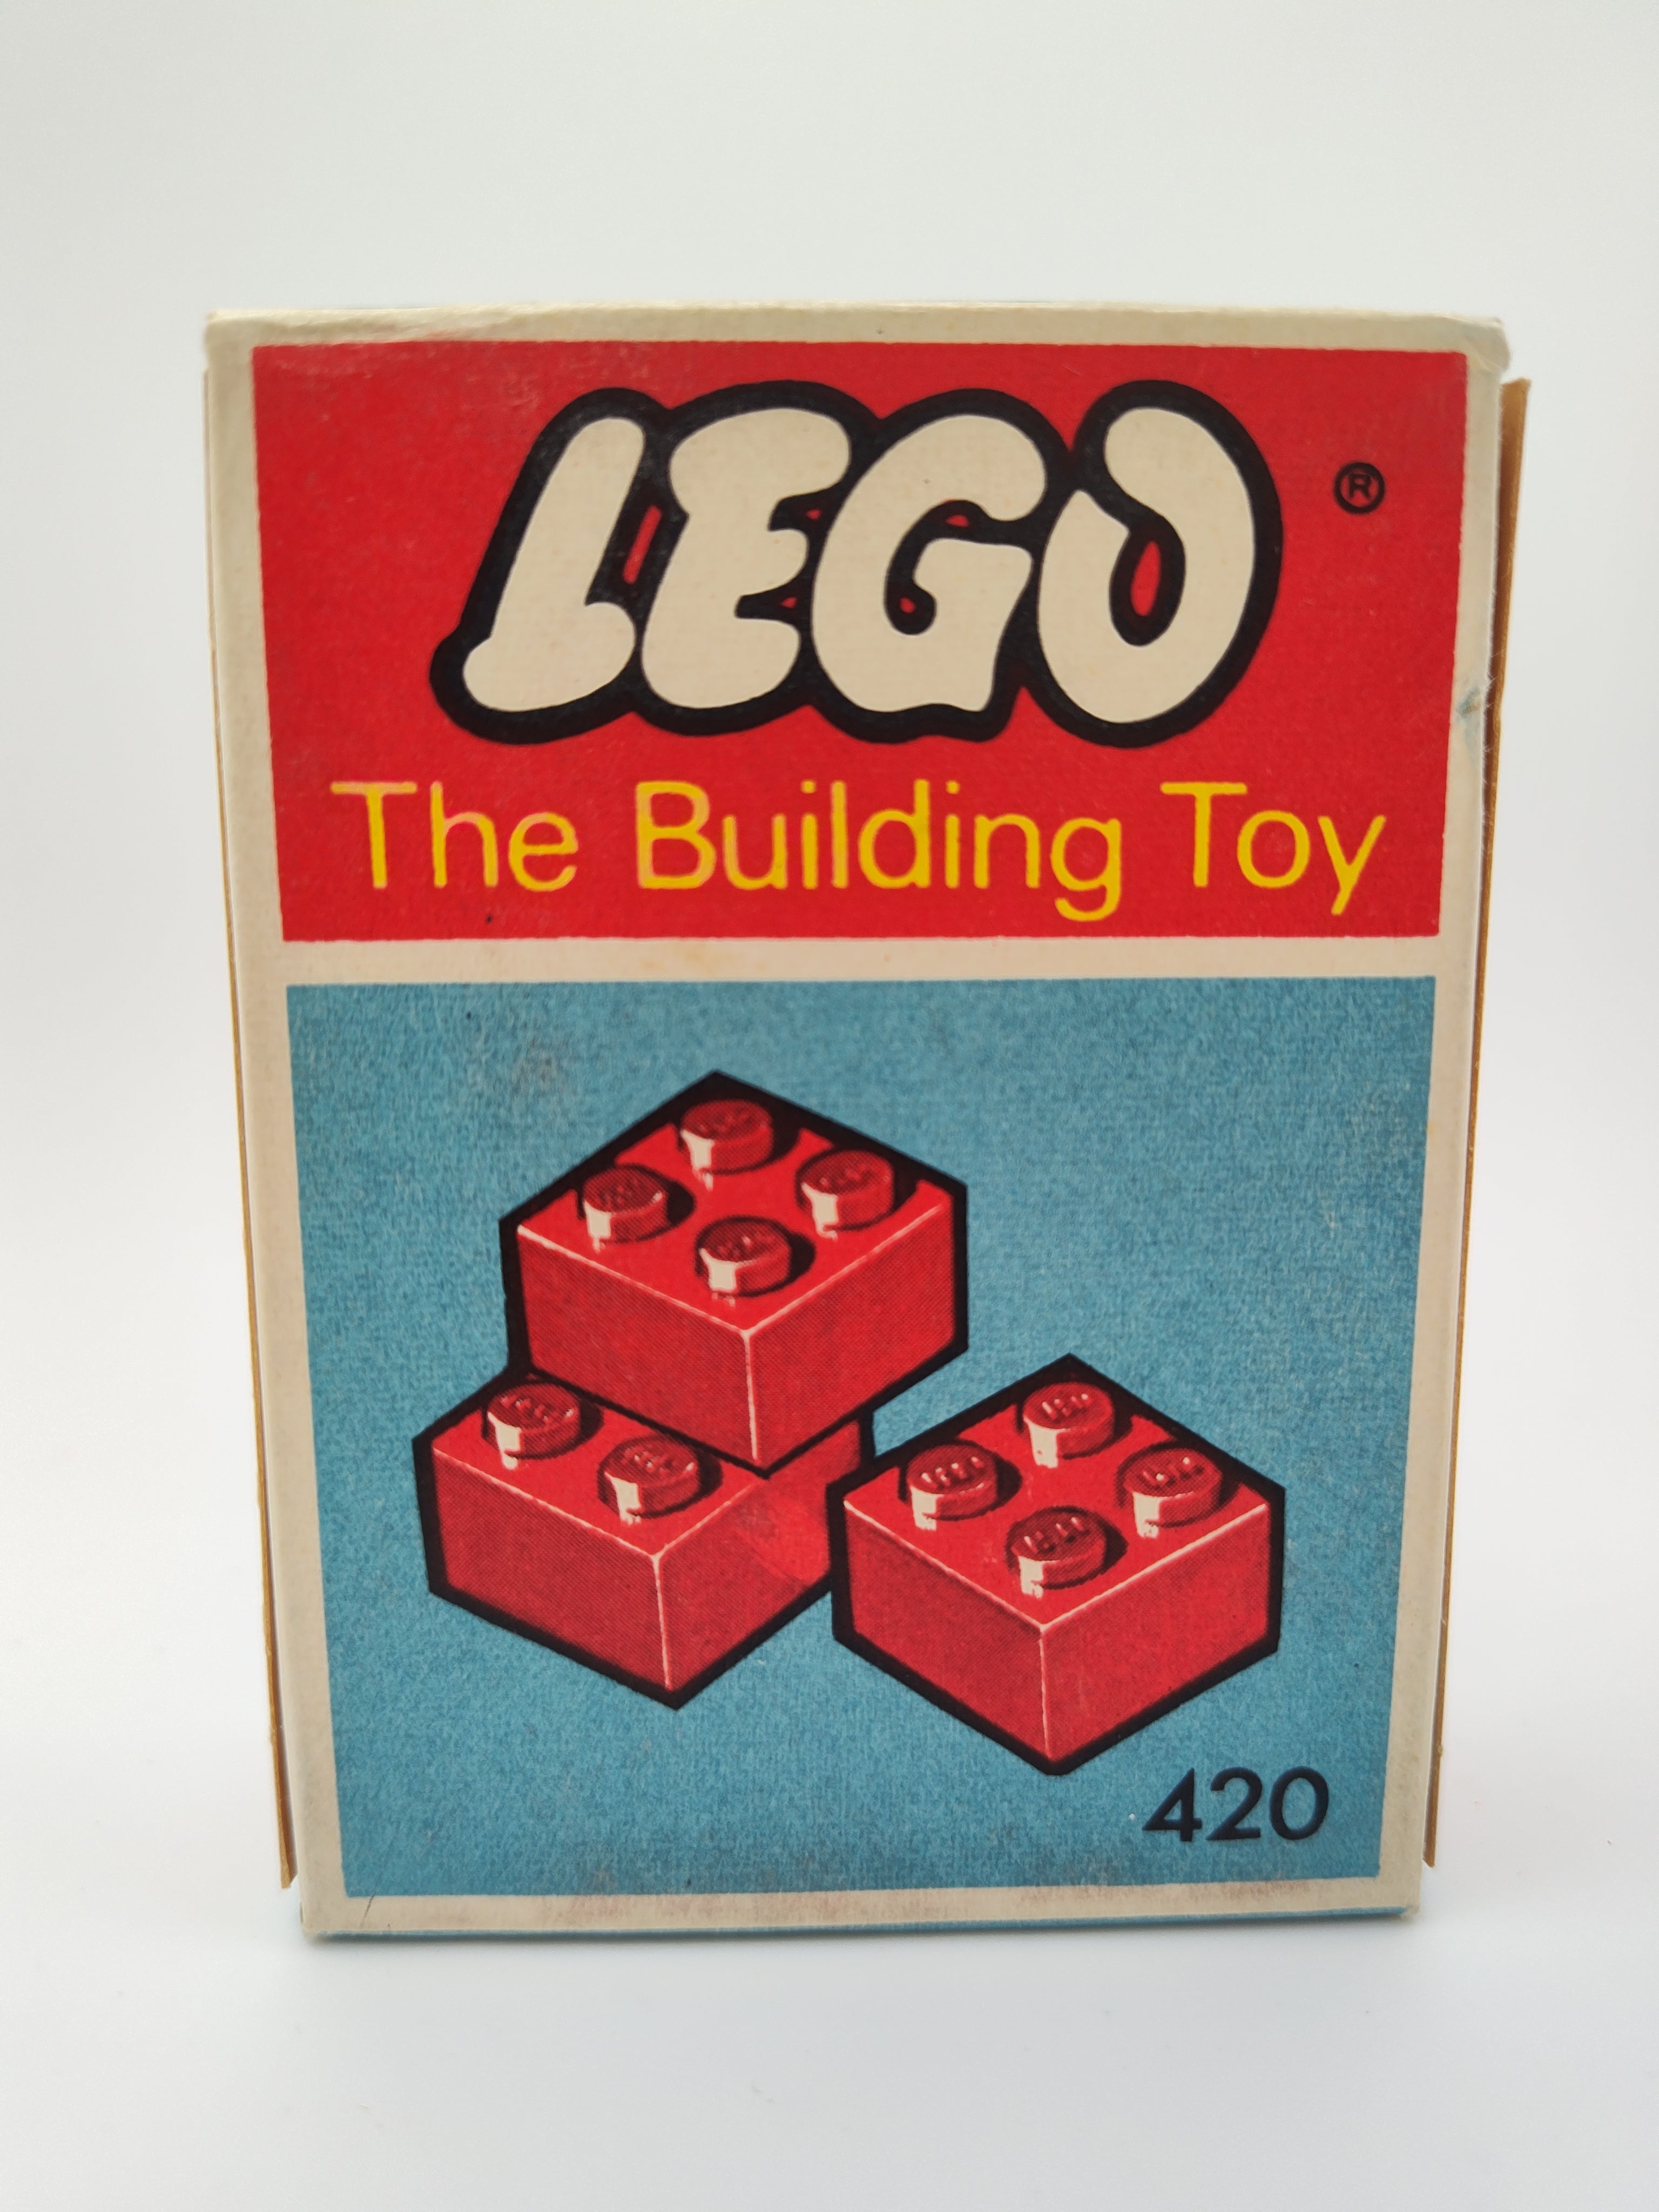 Set 420-3, 2 x 2 Bricks (The Building Toy)